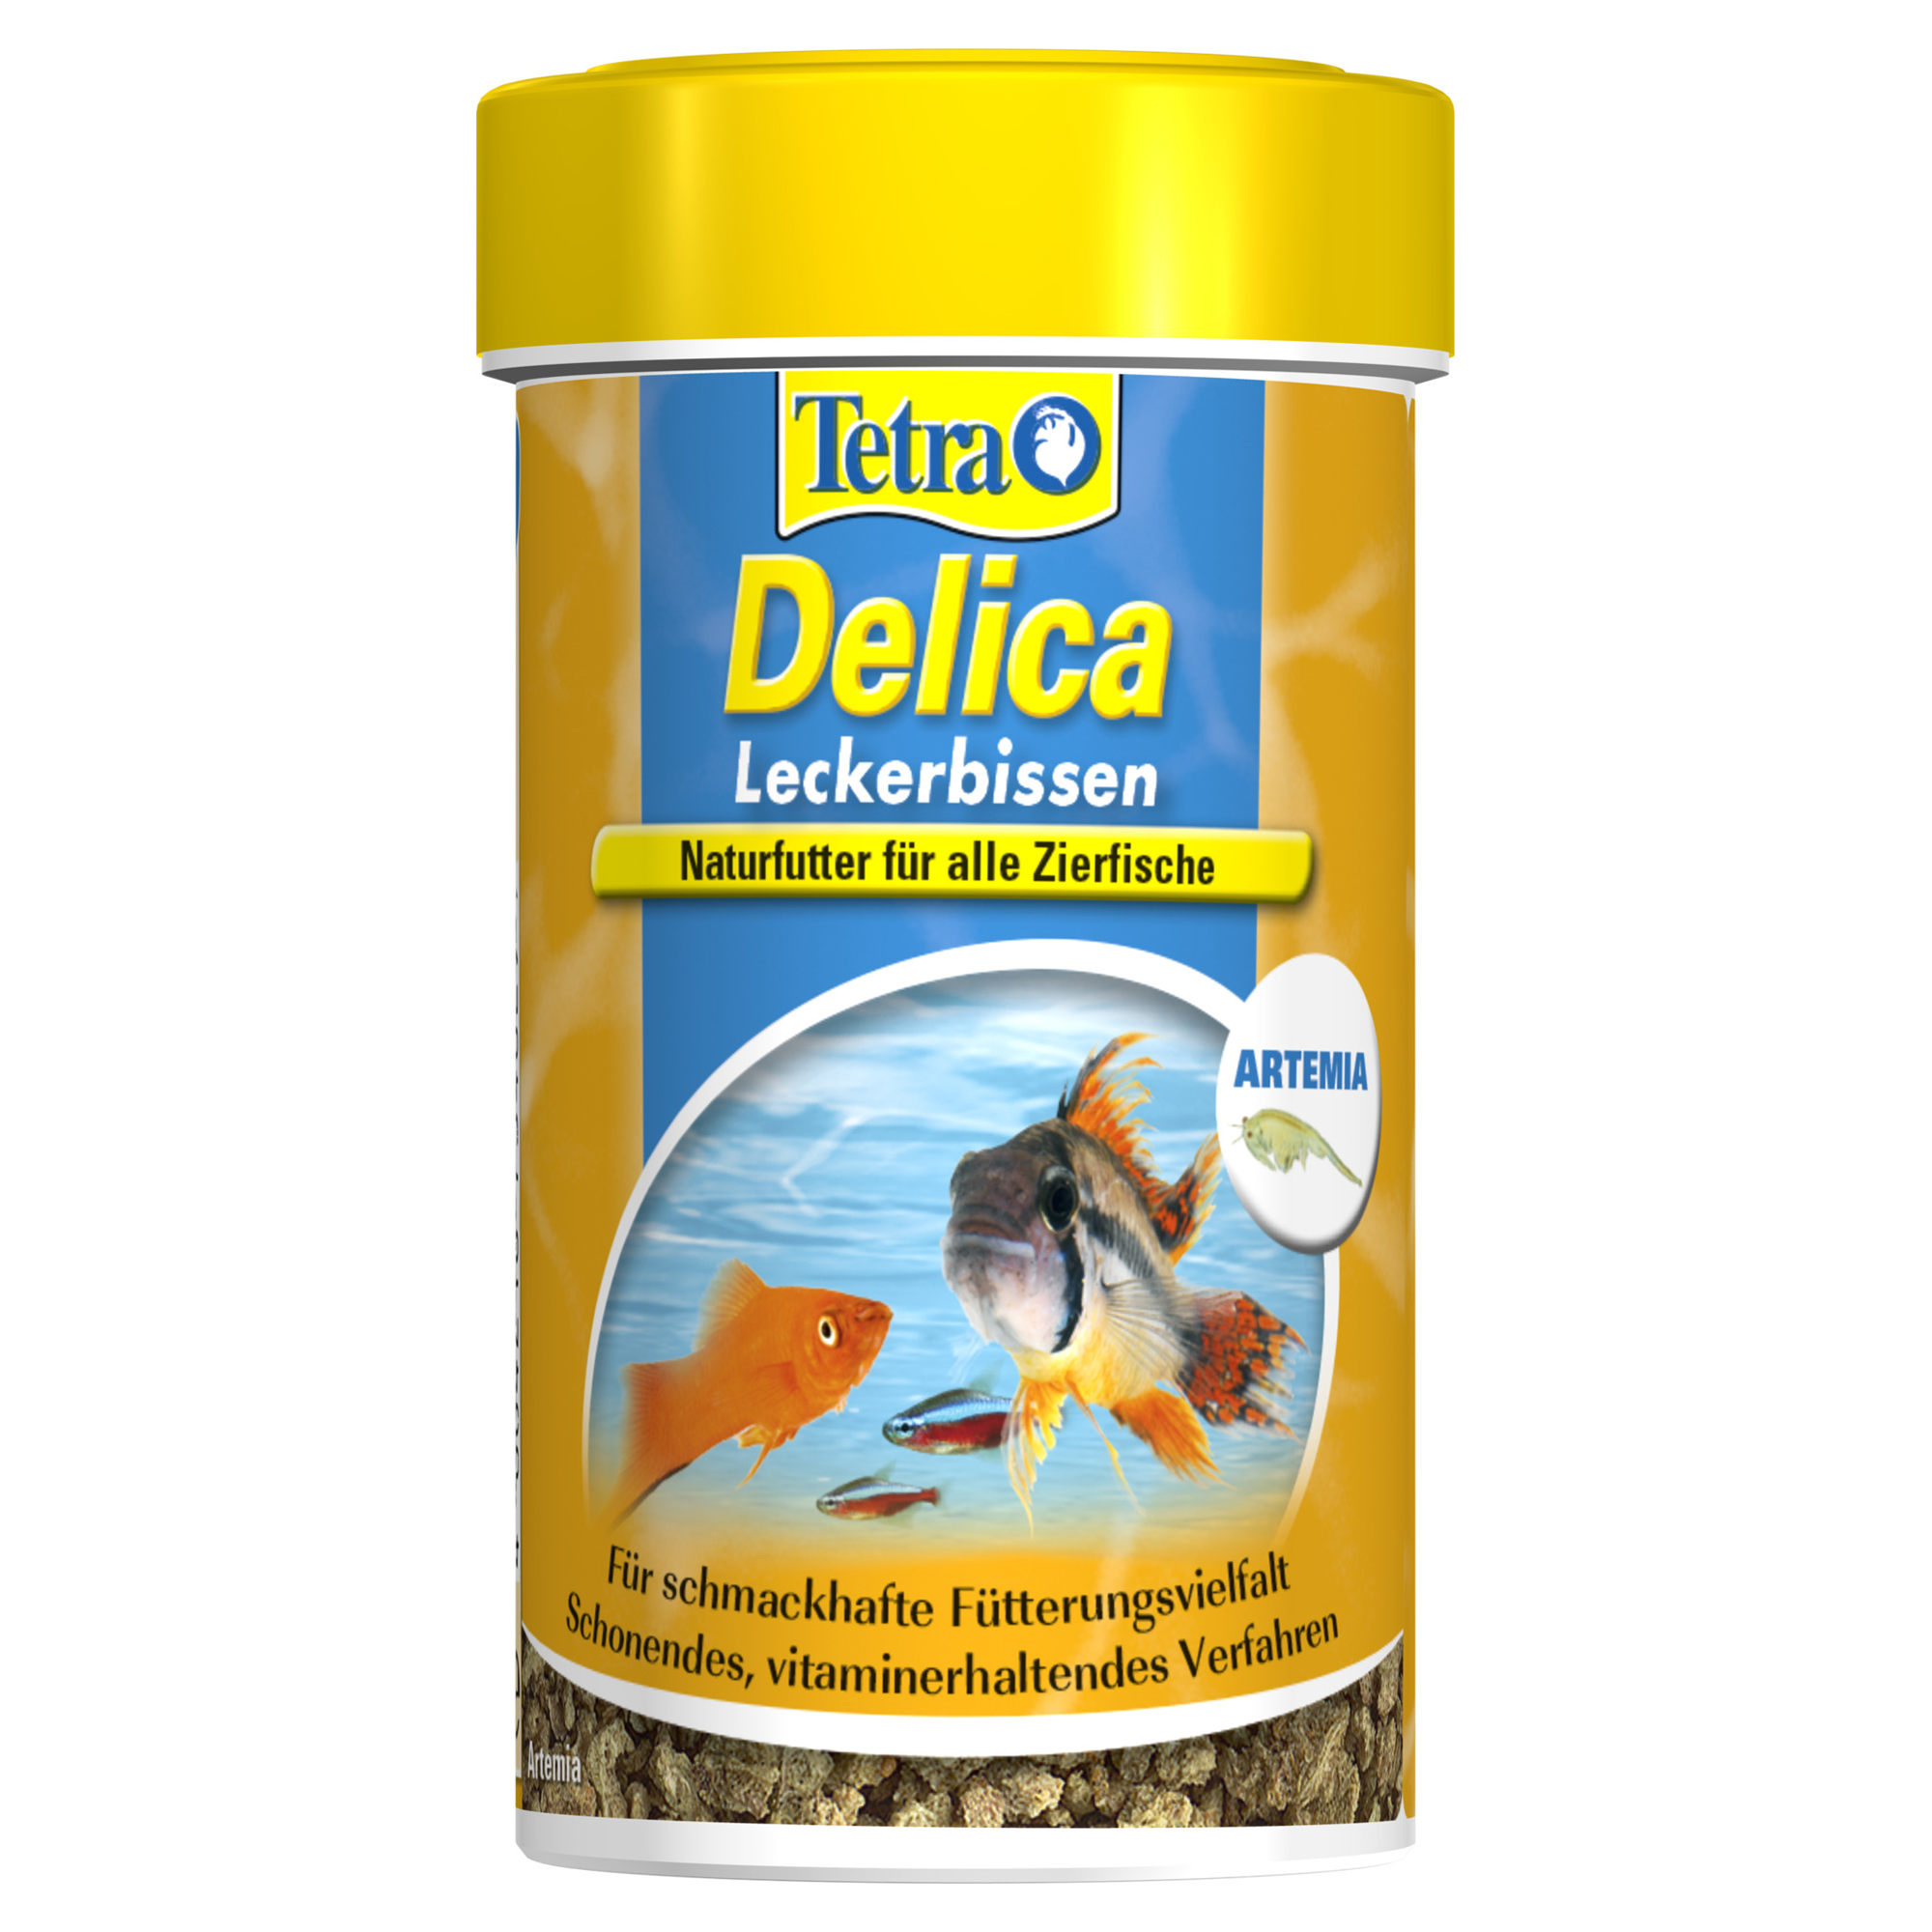 Fischfutter "Delica" Artemia 100 ml + product picture